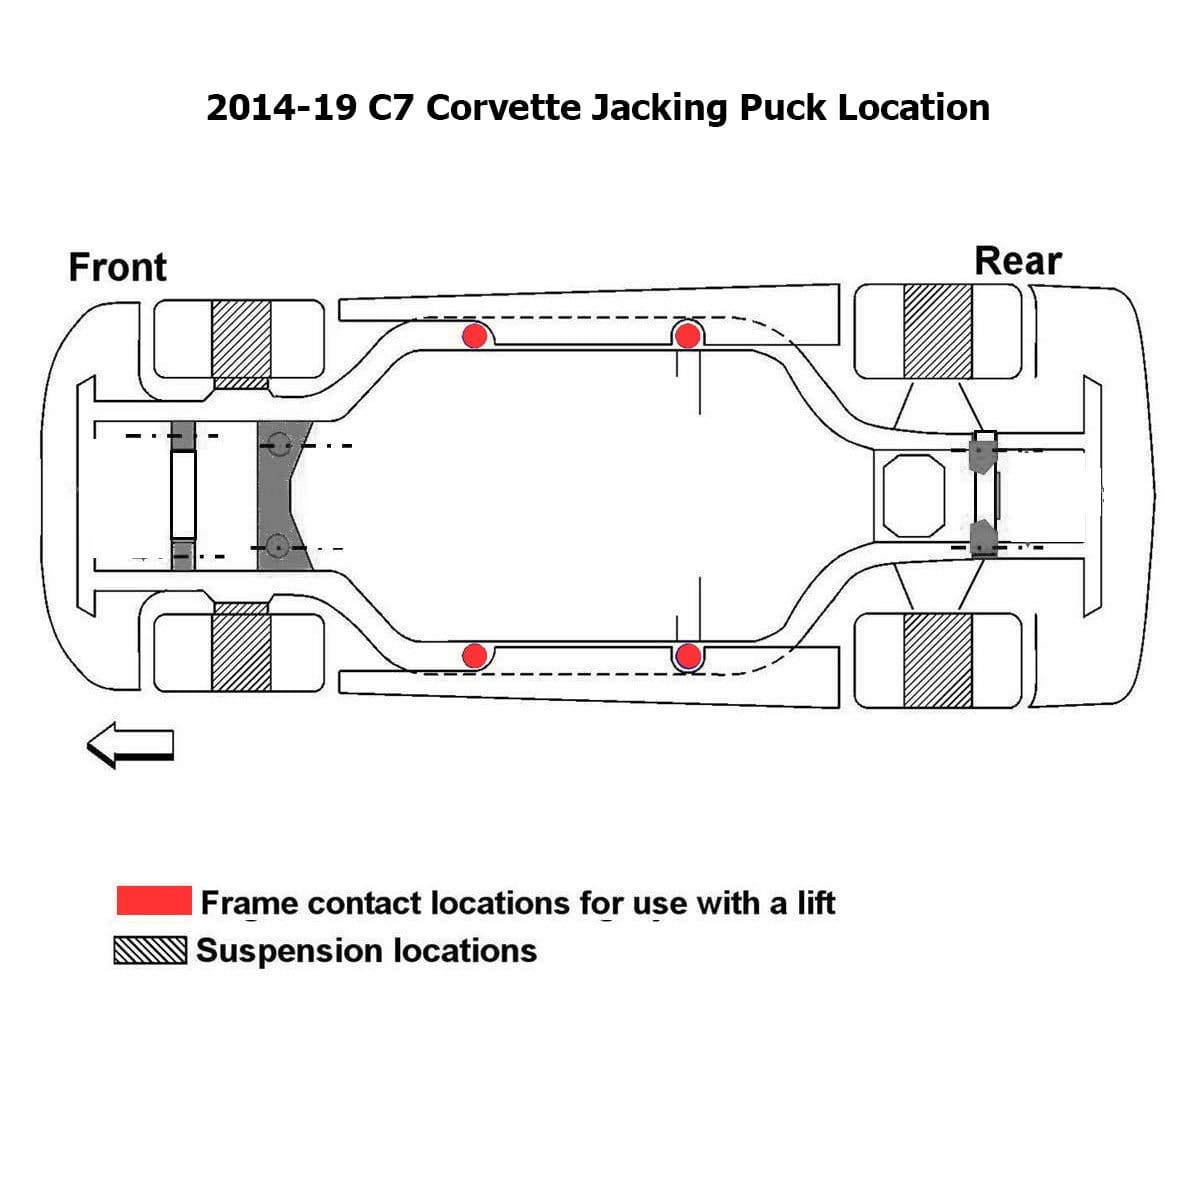 ACS Composite Corvette Jacking Pucks for C5-C8 Corvettes, SKU 45-4-195, installed on underside of car for safe lifting.